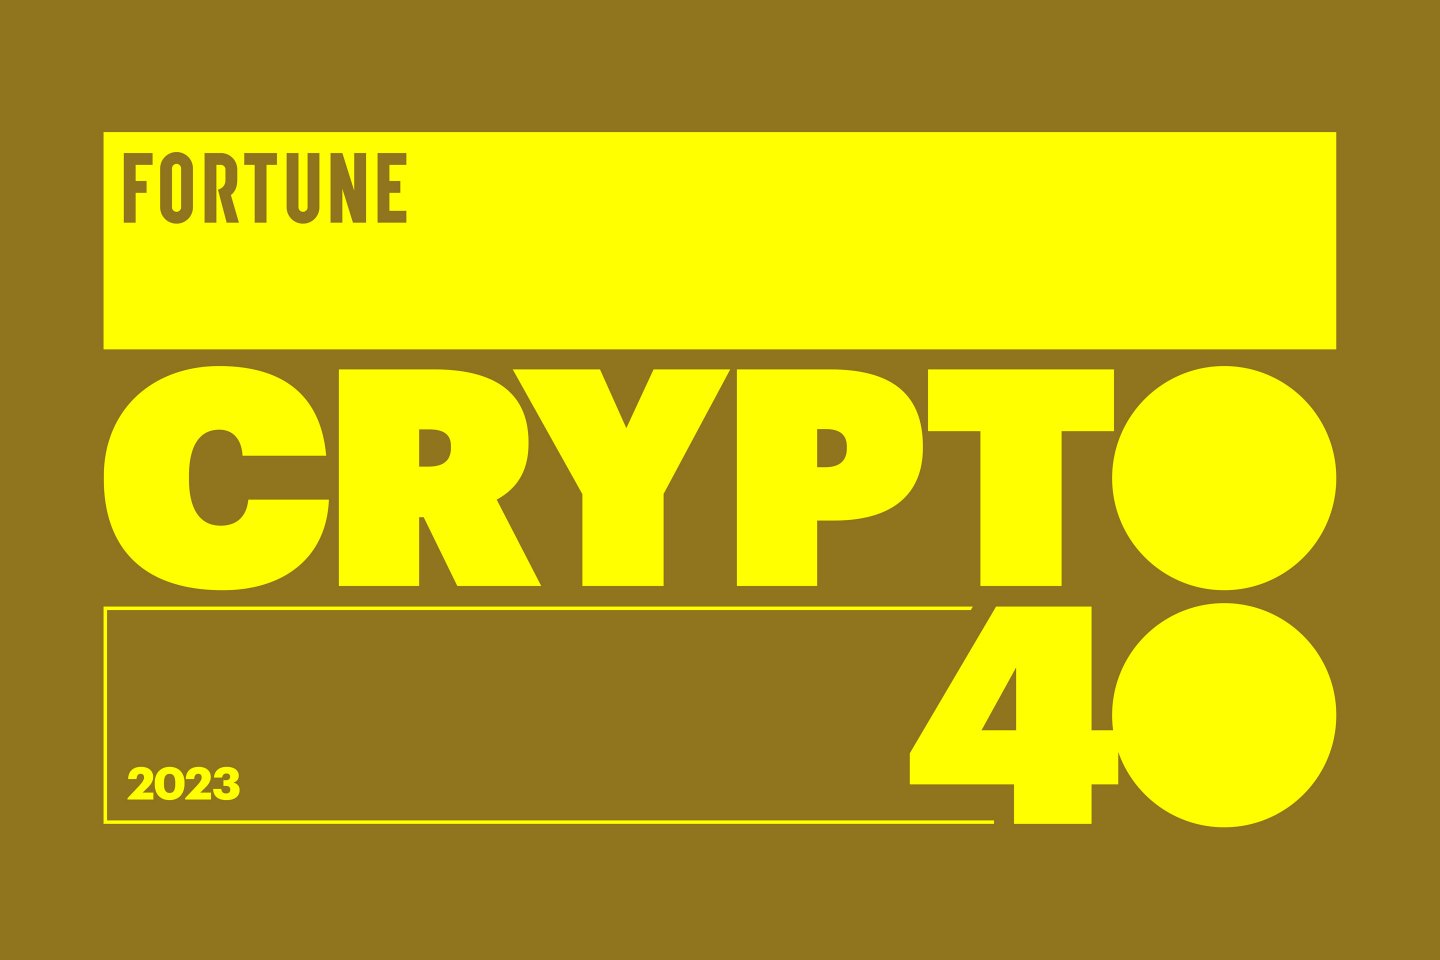 Fortune Crypto 40